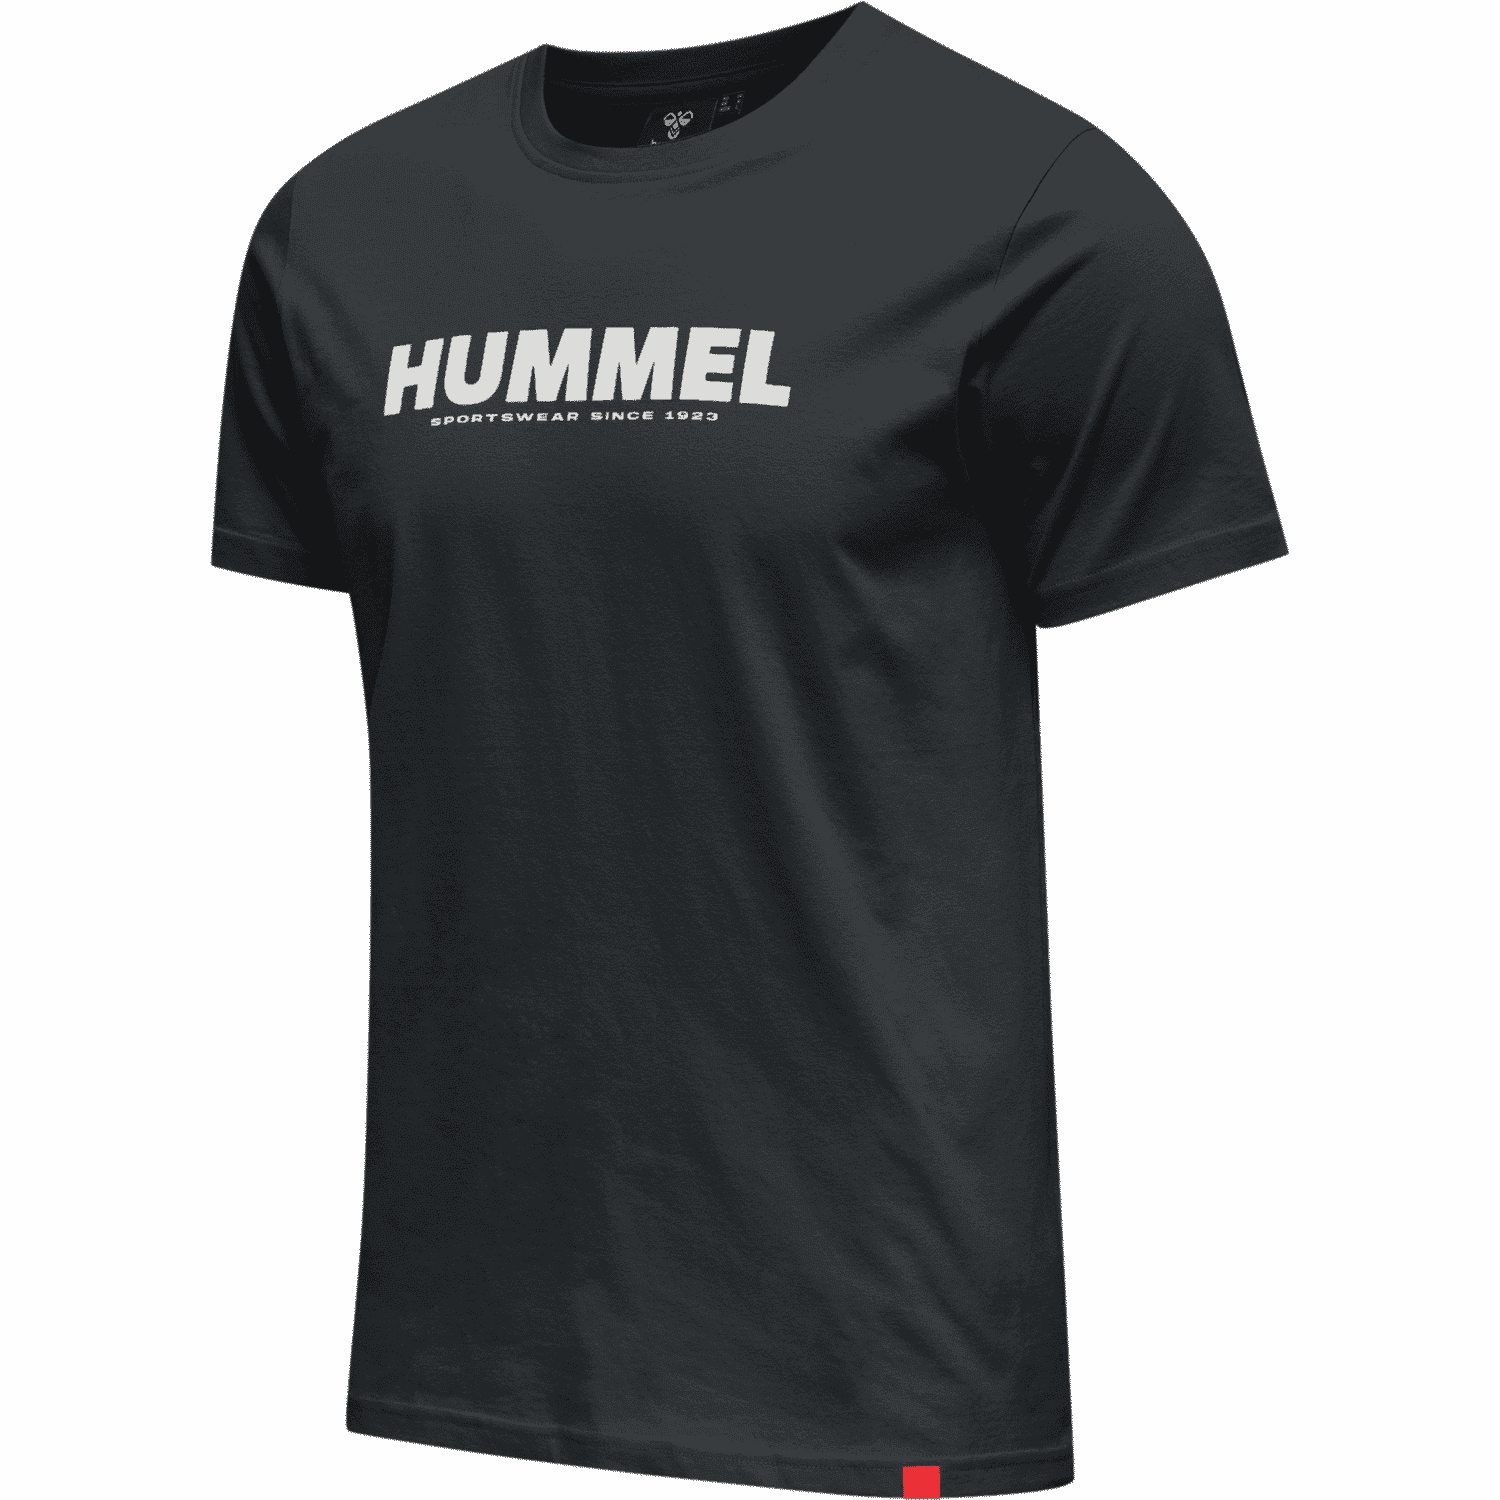 hummel - hmlLEGACY T-SHIRT - BLACK - M